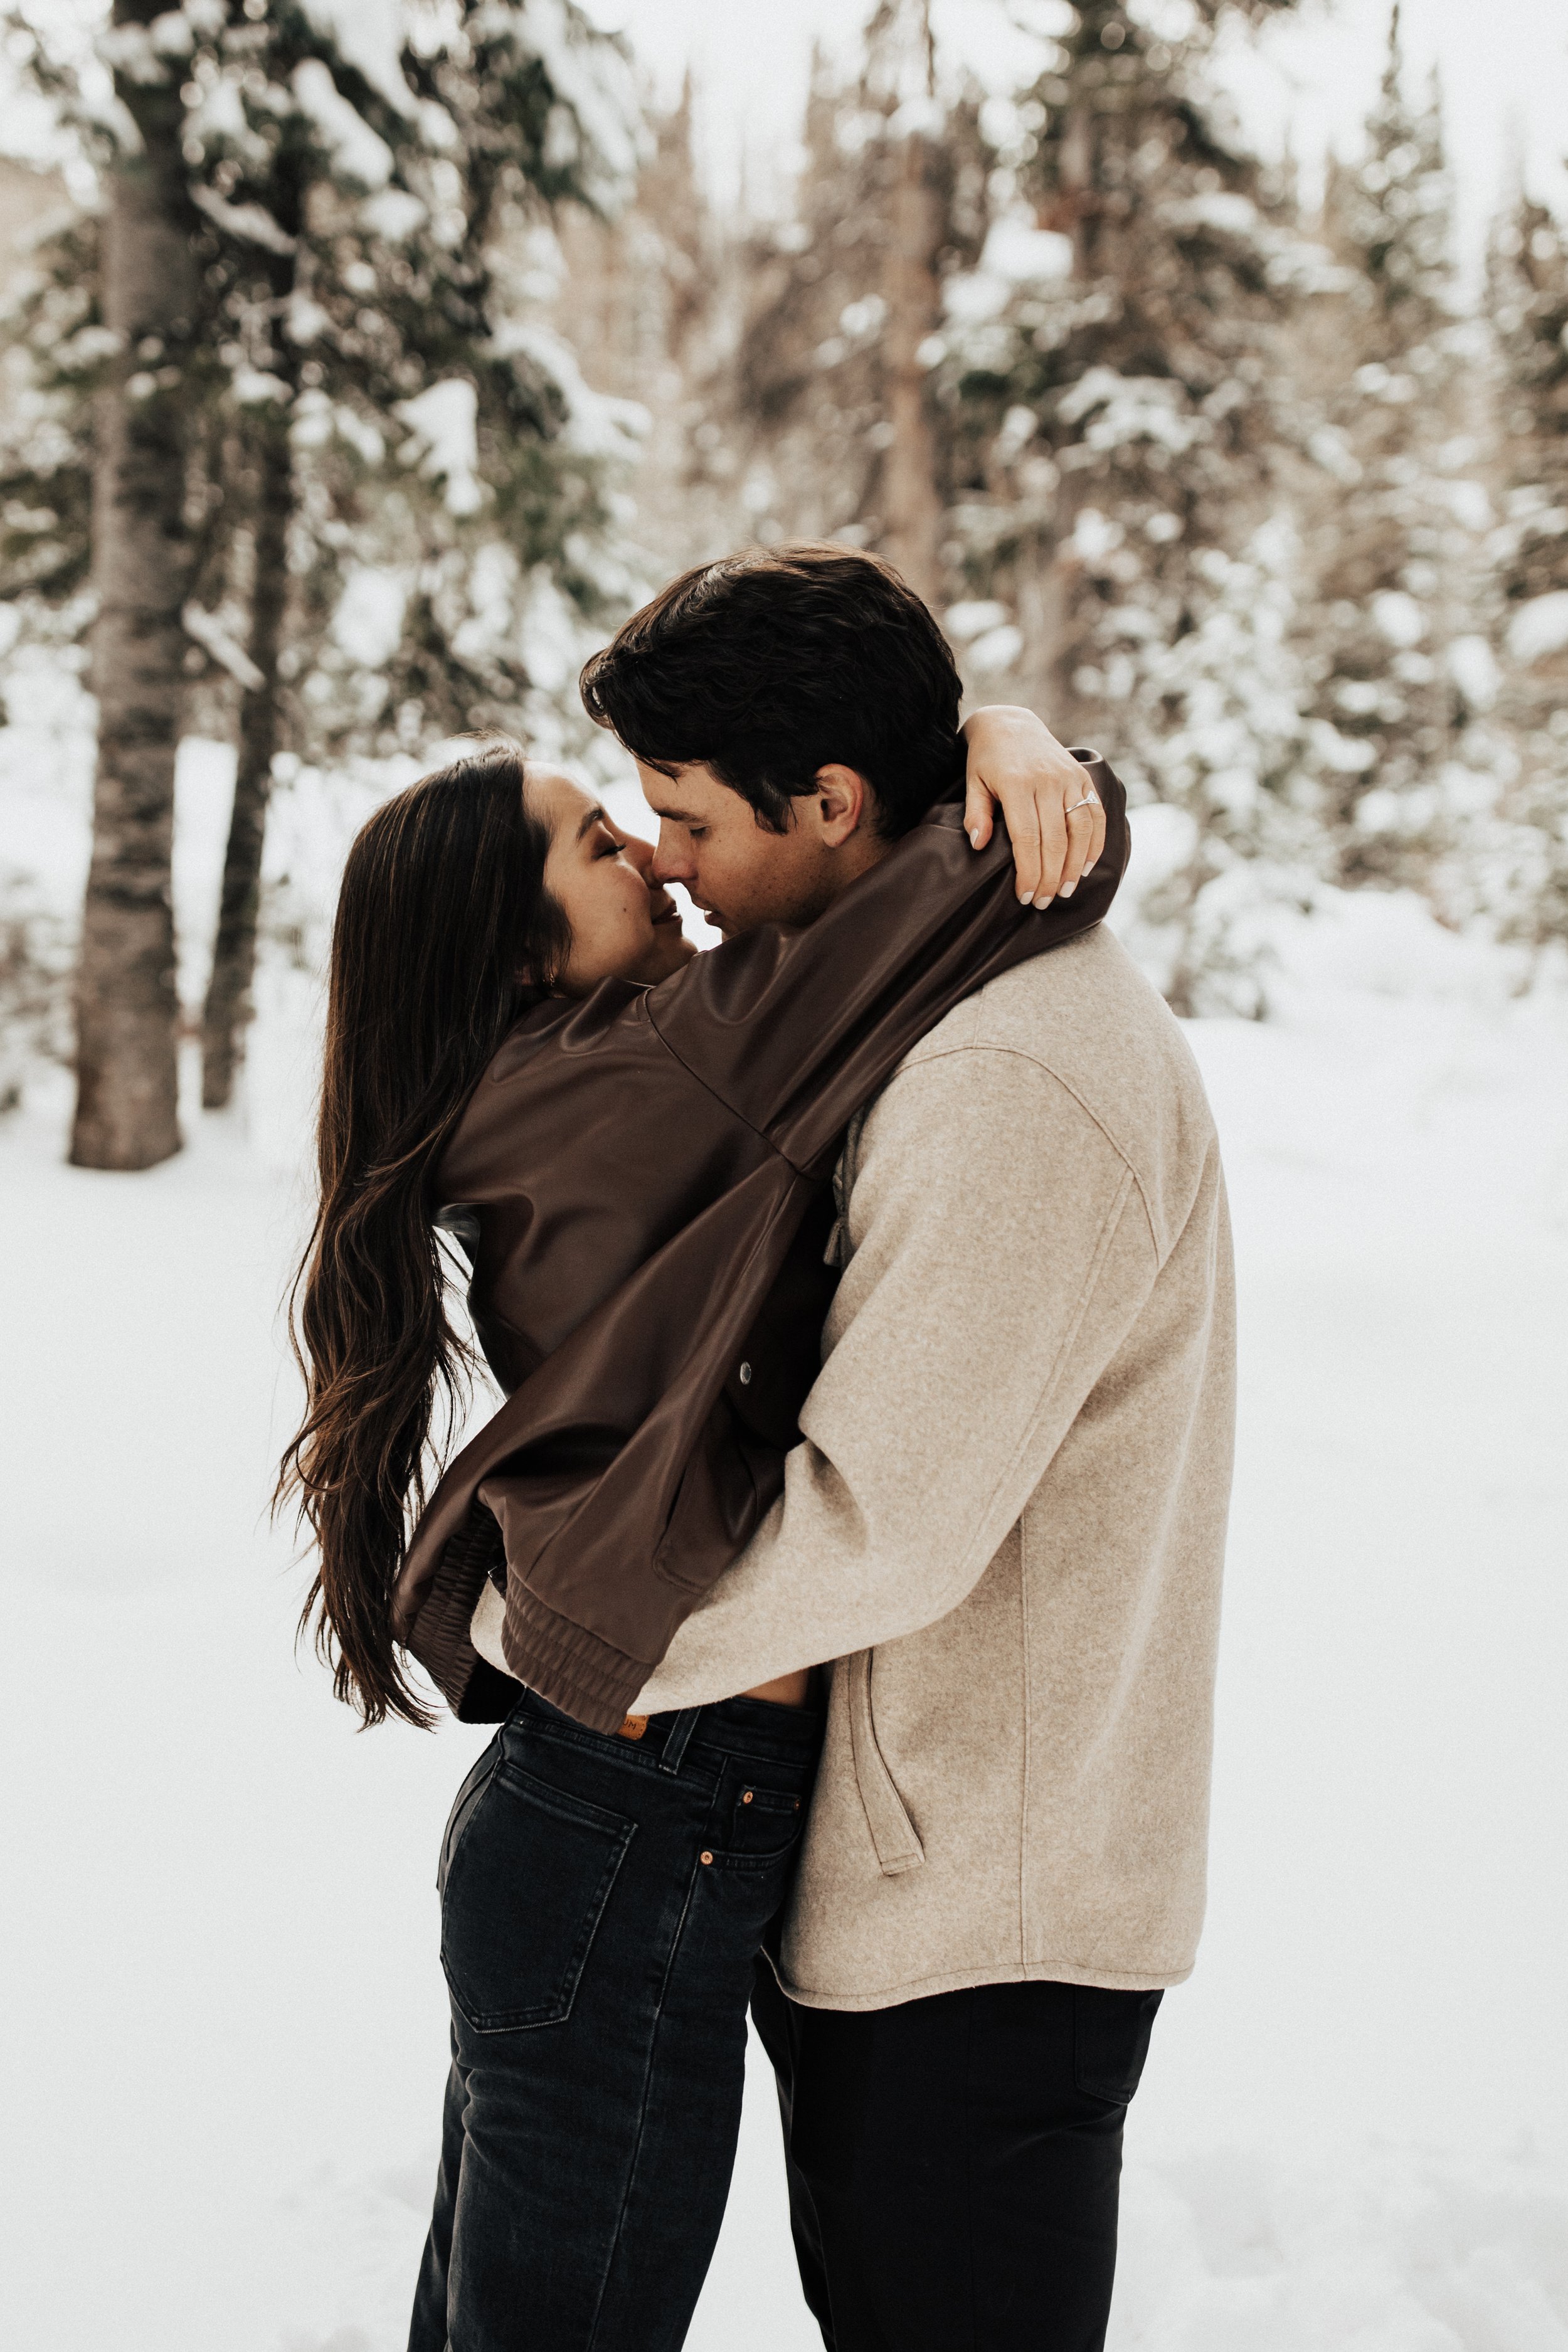 romantic-surprise-winter-proposal-44.jpg